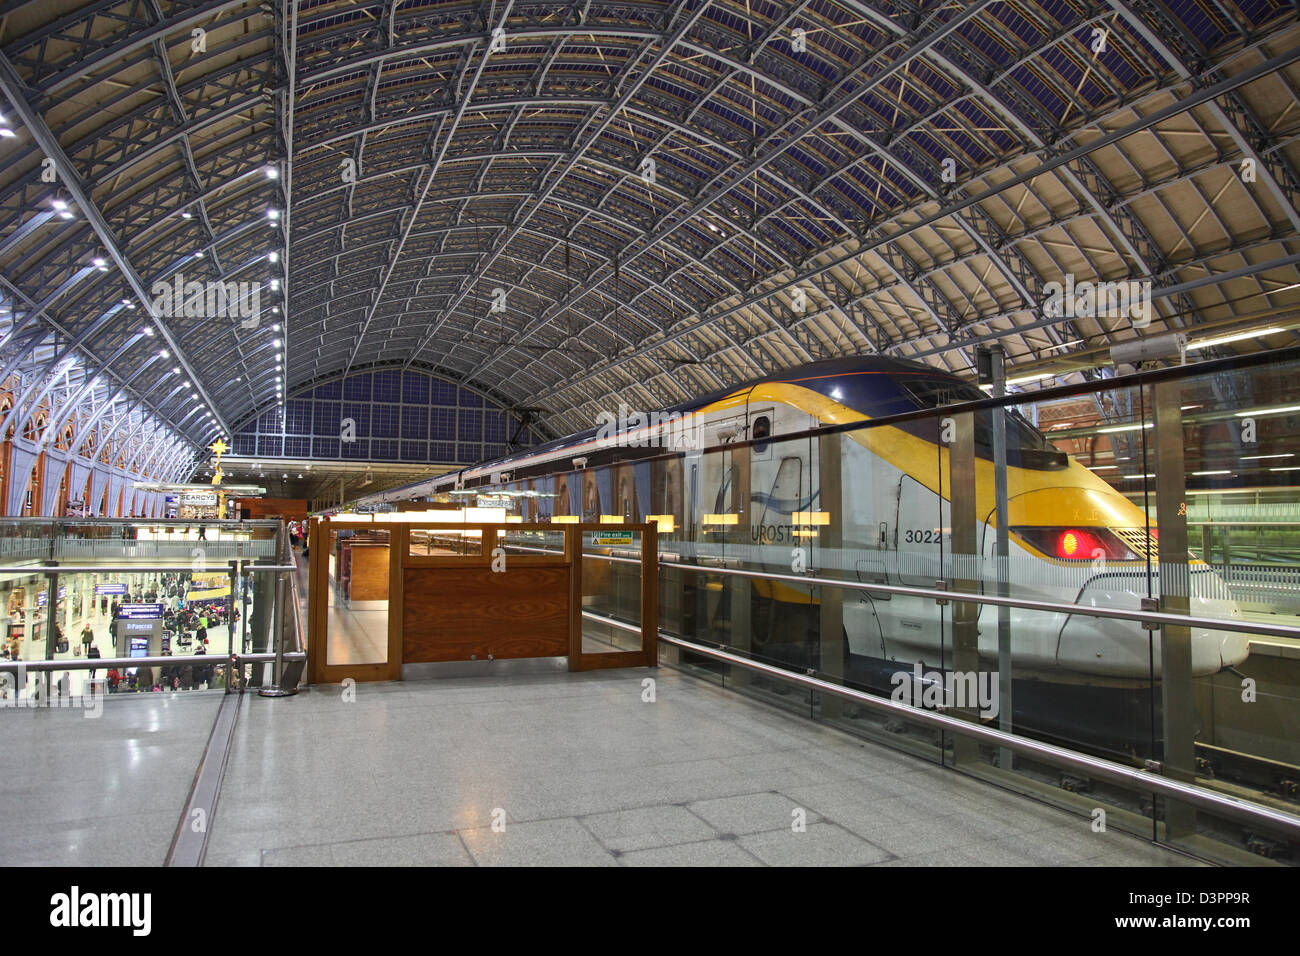 A Eurostar train stationary at St Pancras International railway station London England UK Stock Photo